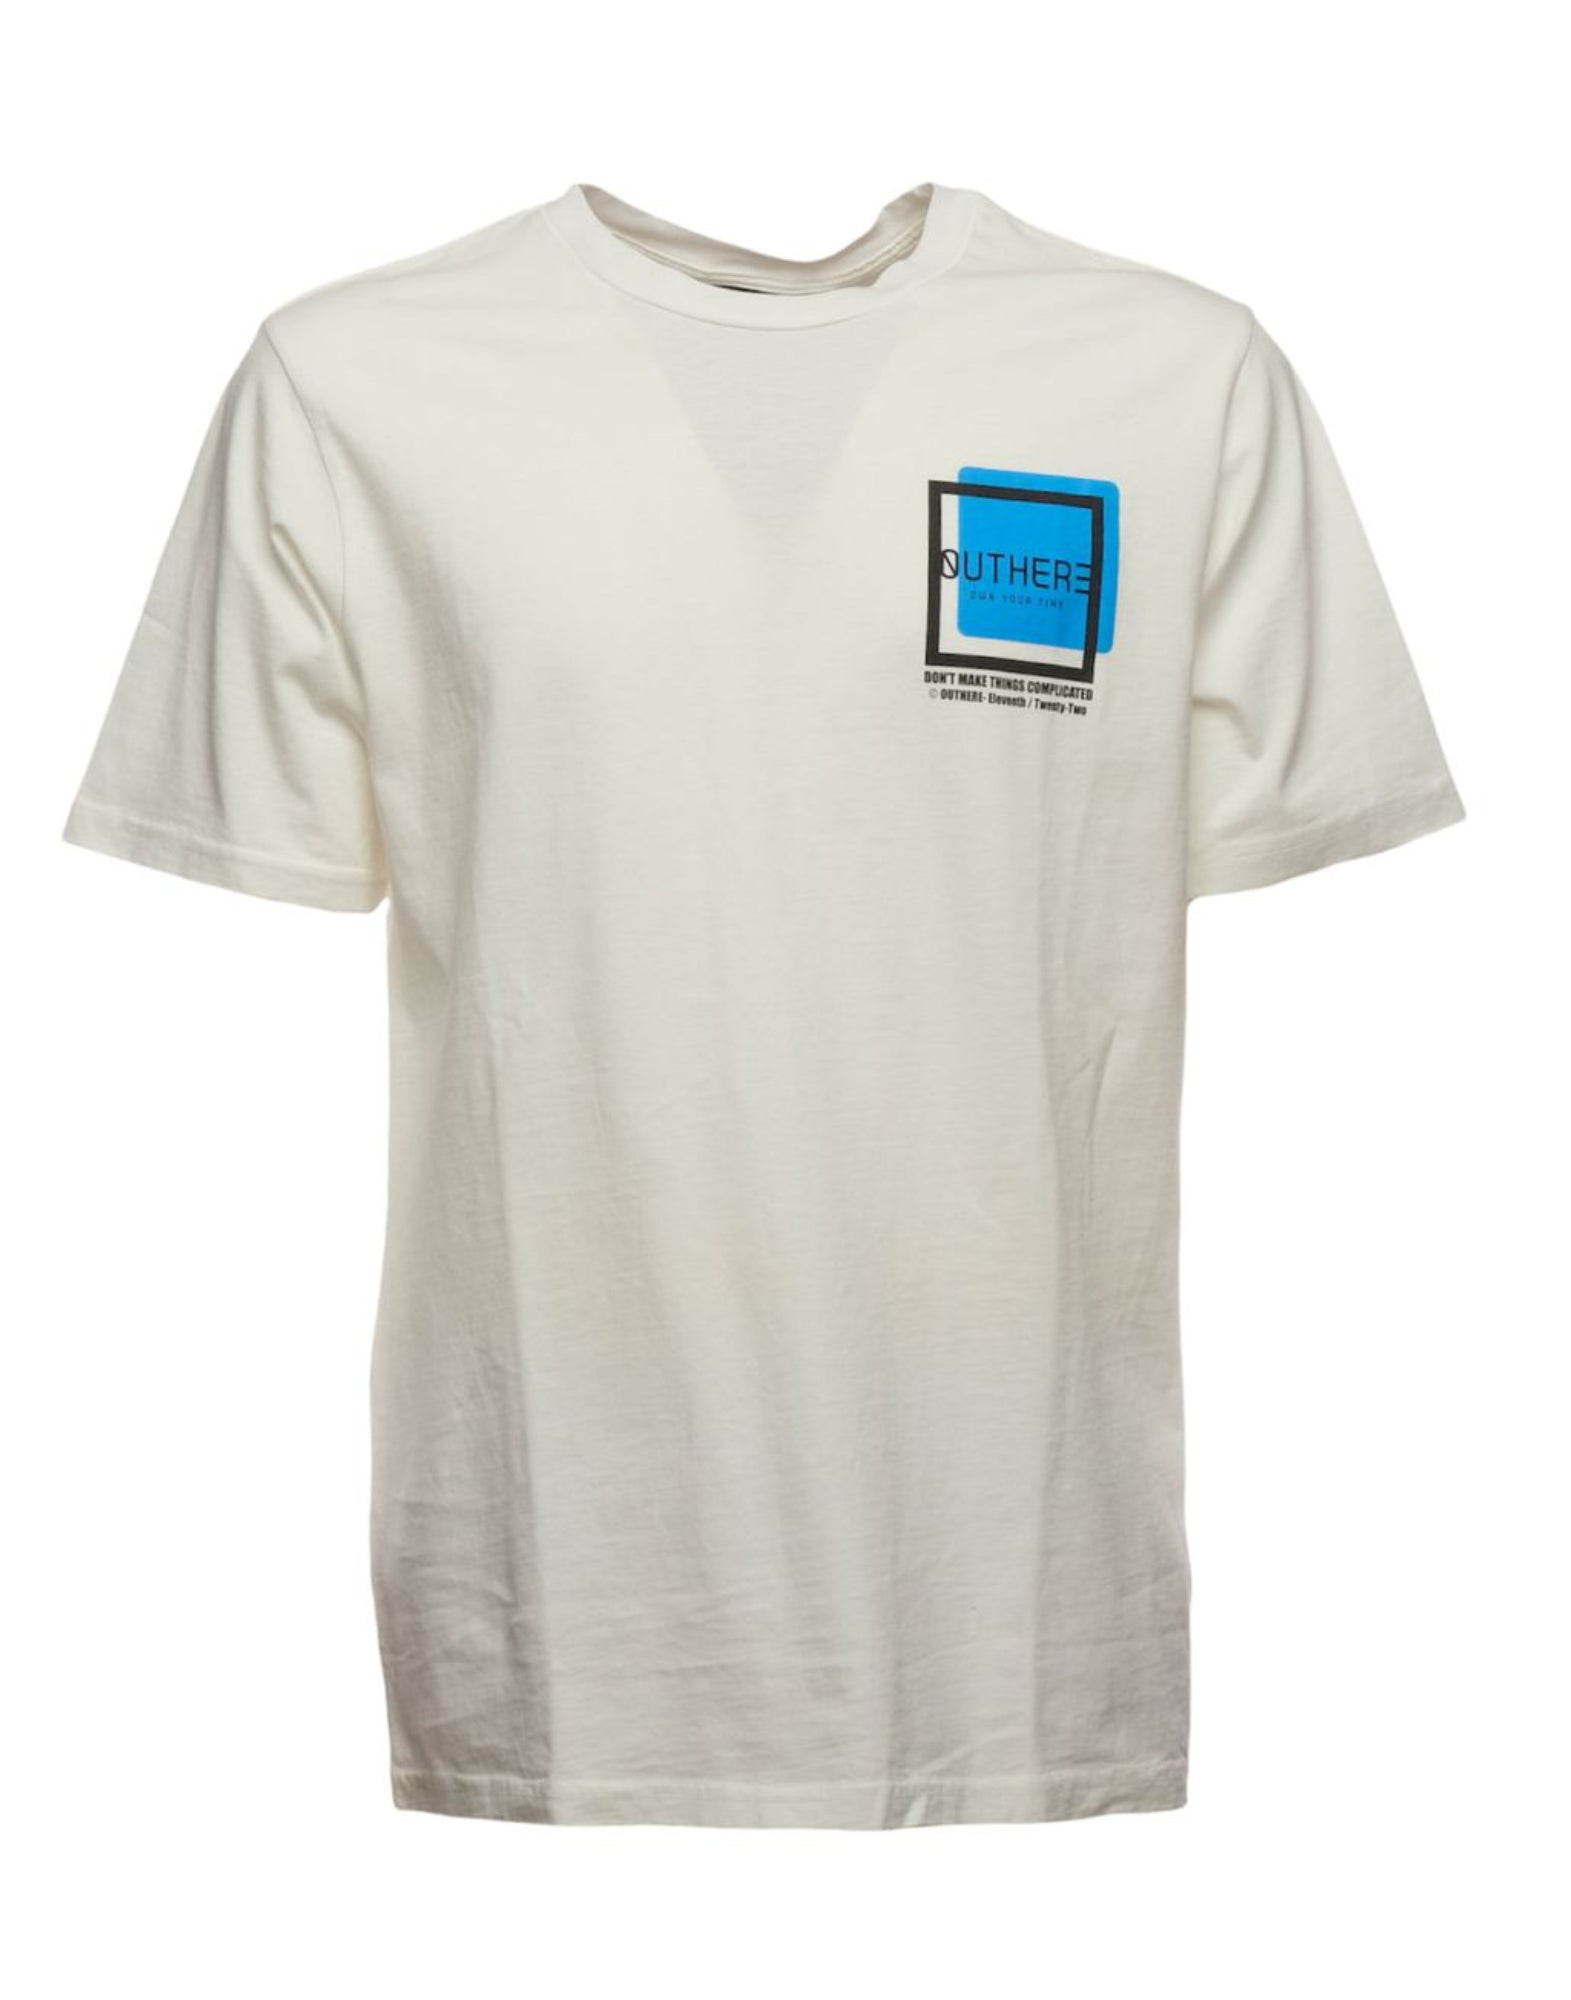 T-Shirt Man EOTM113AC80 Outheree